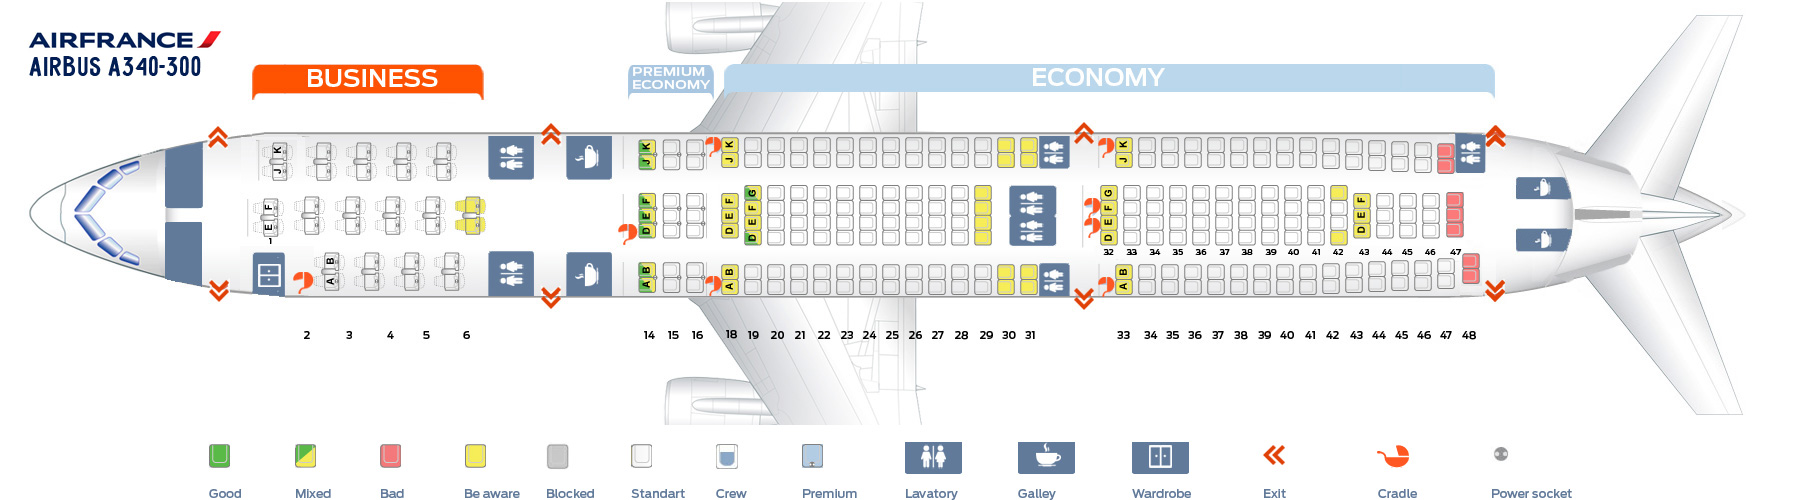 Air France A343 Seating Chart